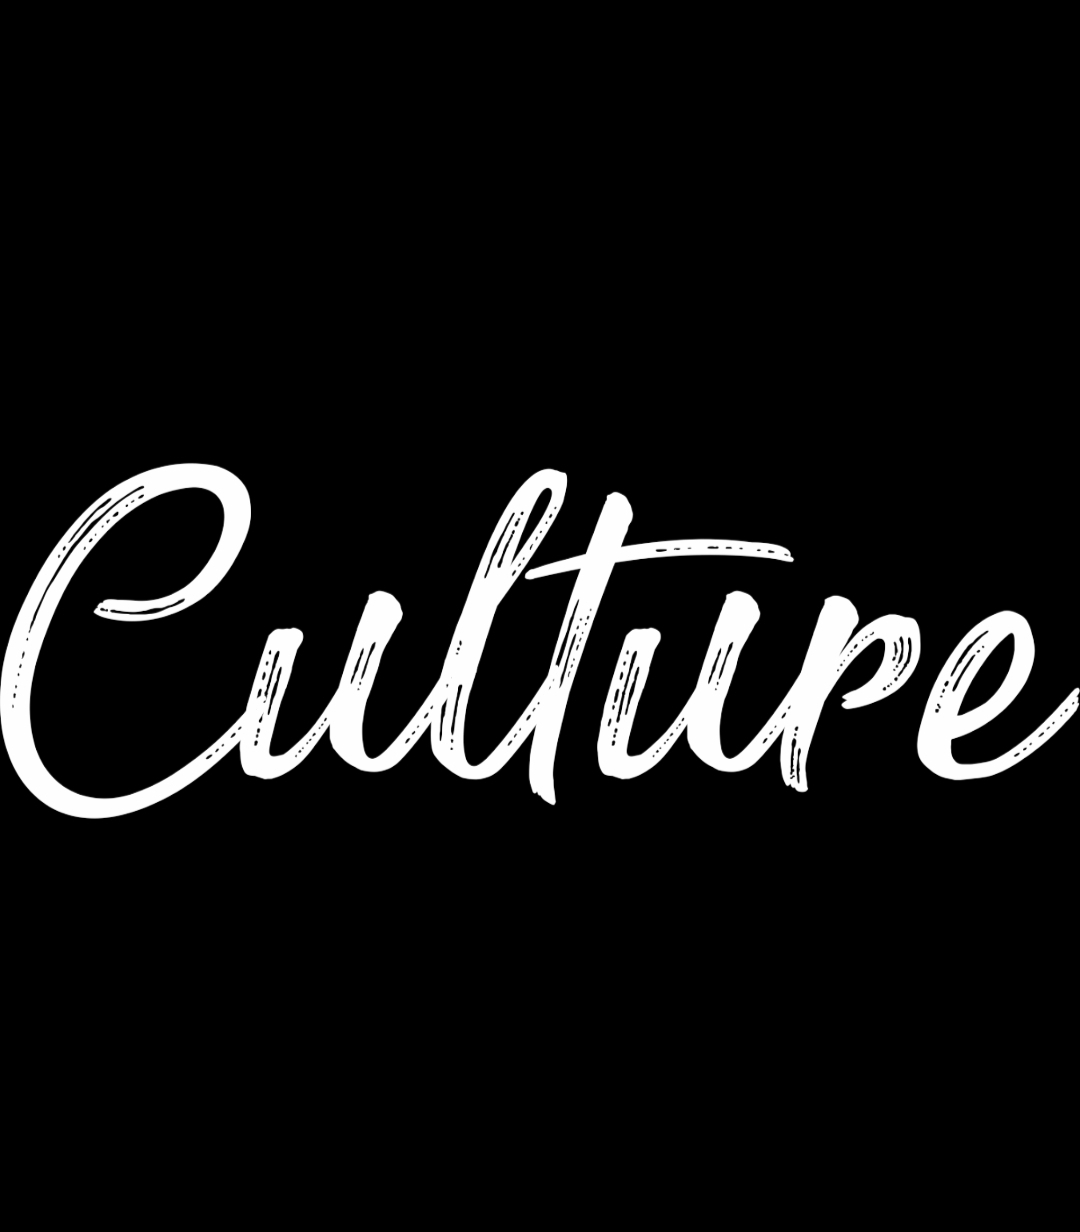 Culture.id